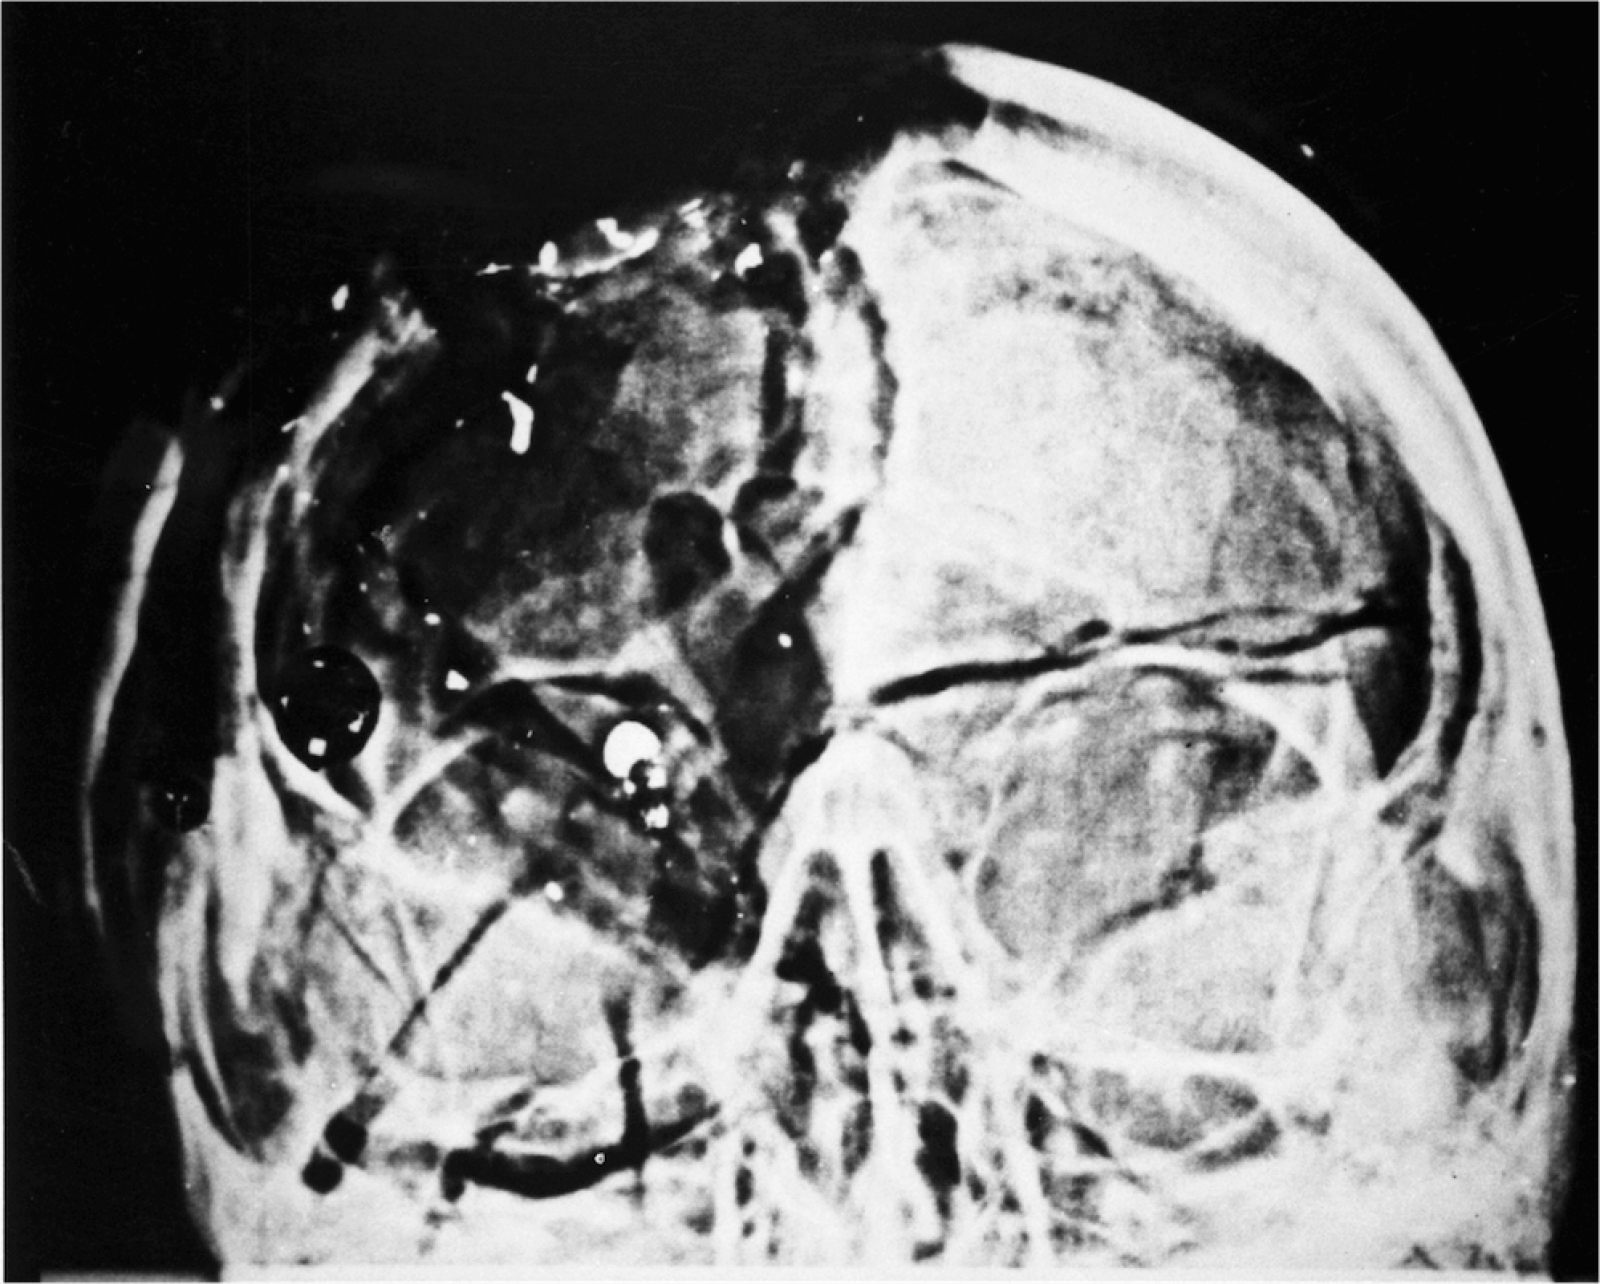 The State of Texas vs Lee Harvey Oswald: The JFK Autopsy Skull X-rays